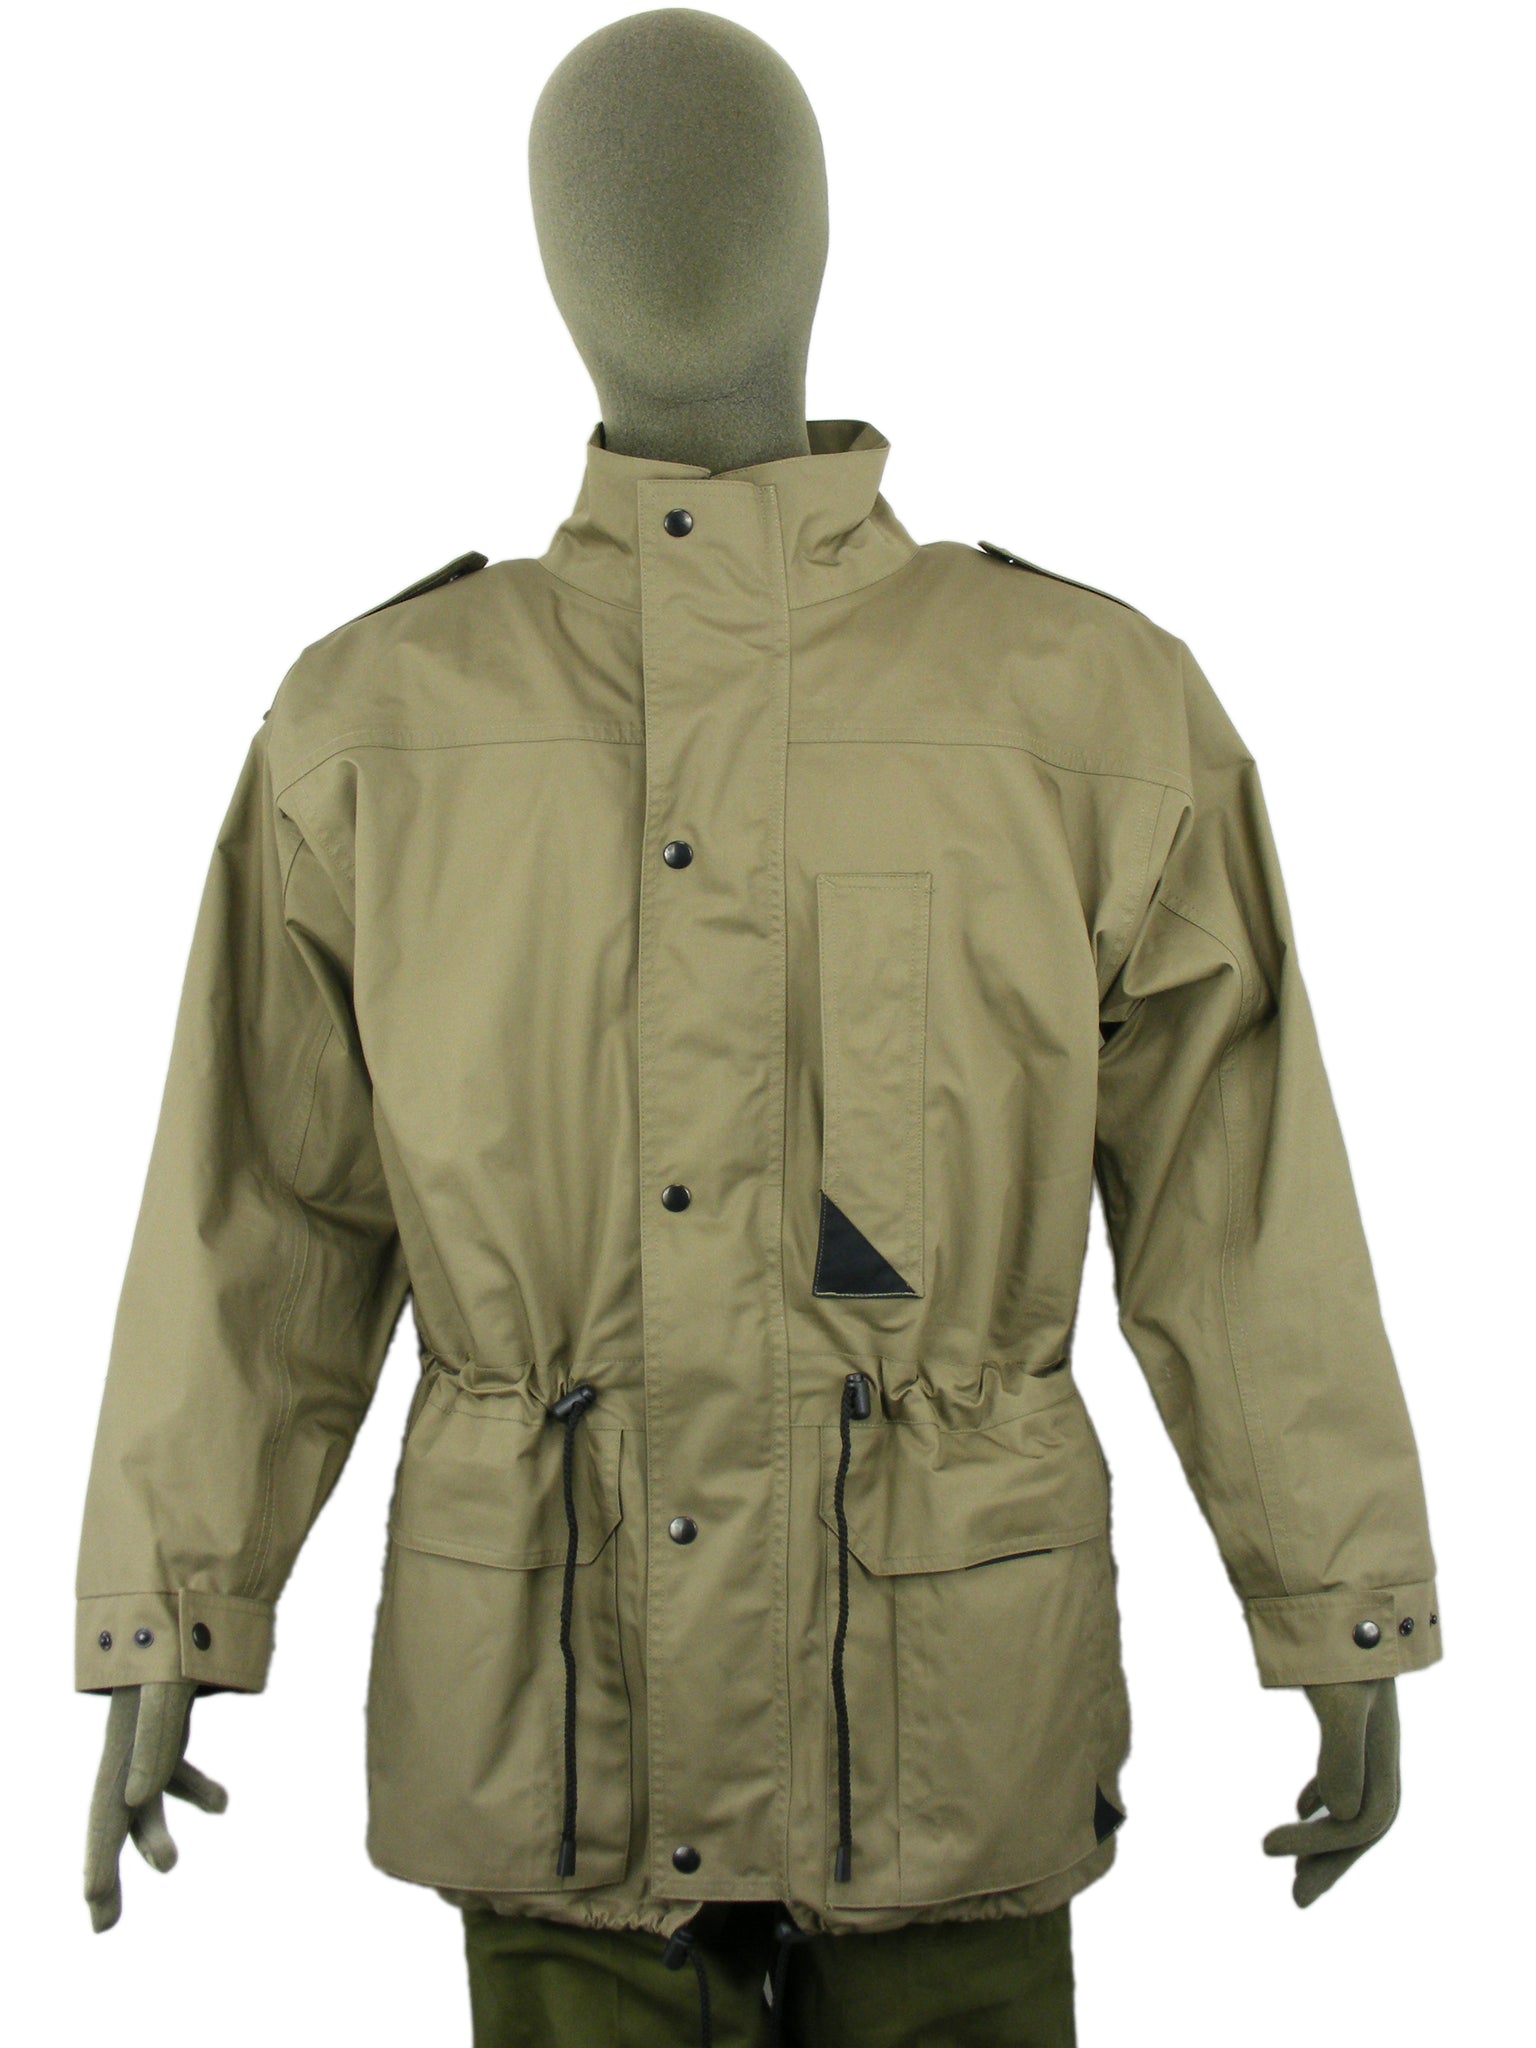 Dutch Military Khaki All-Weather Jacket - New | Forces Uniform and Kit